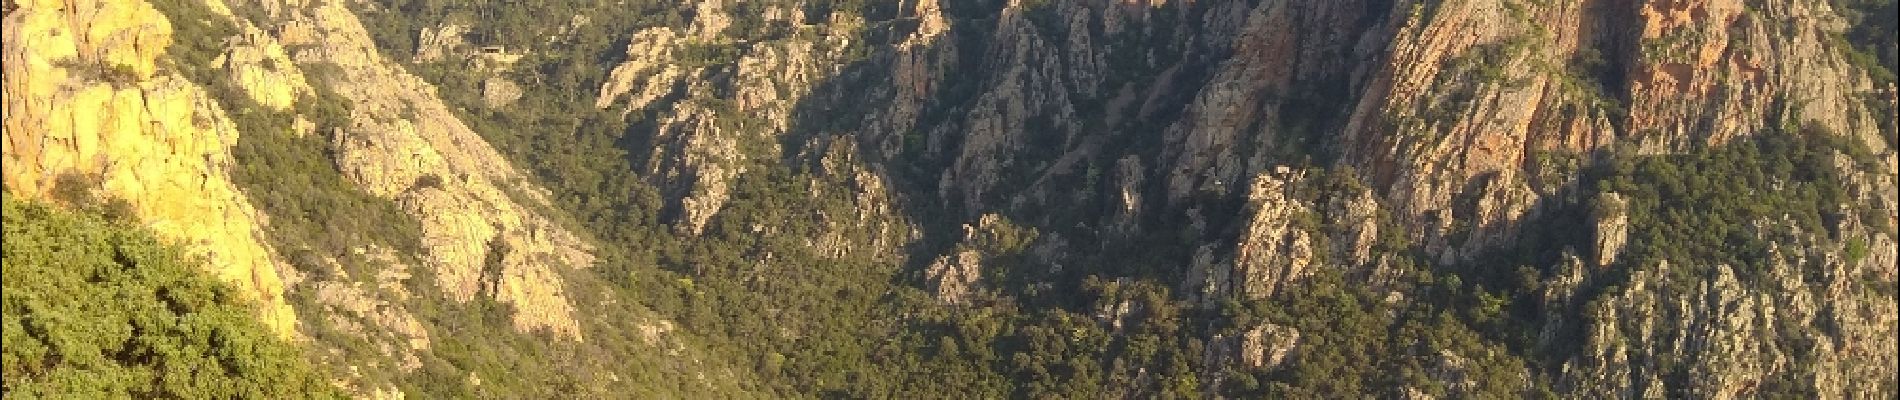 Excursión Senderismo Ota - Corse 2018 sentier des gorges - Photo